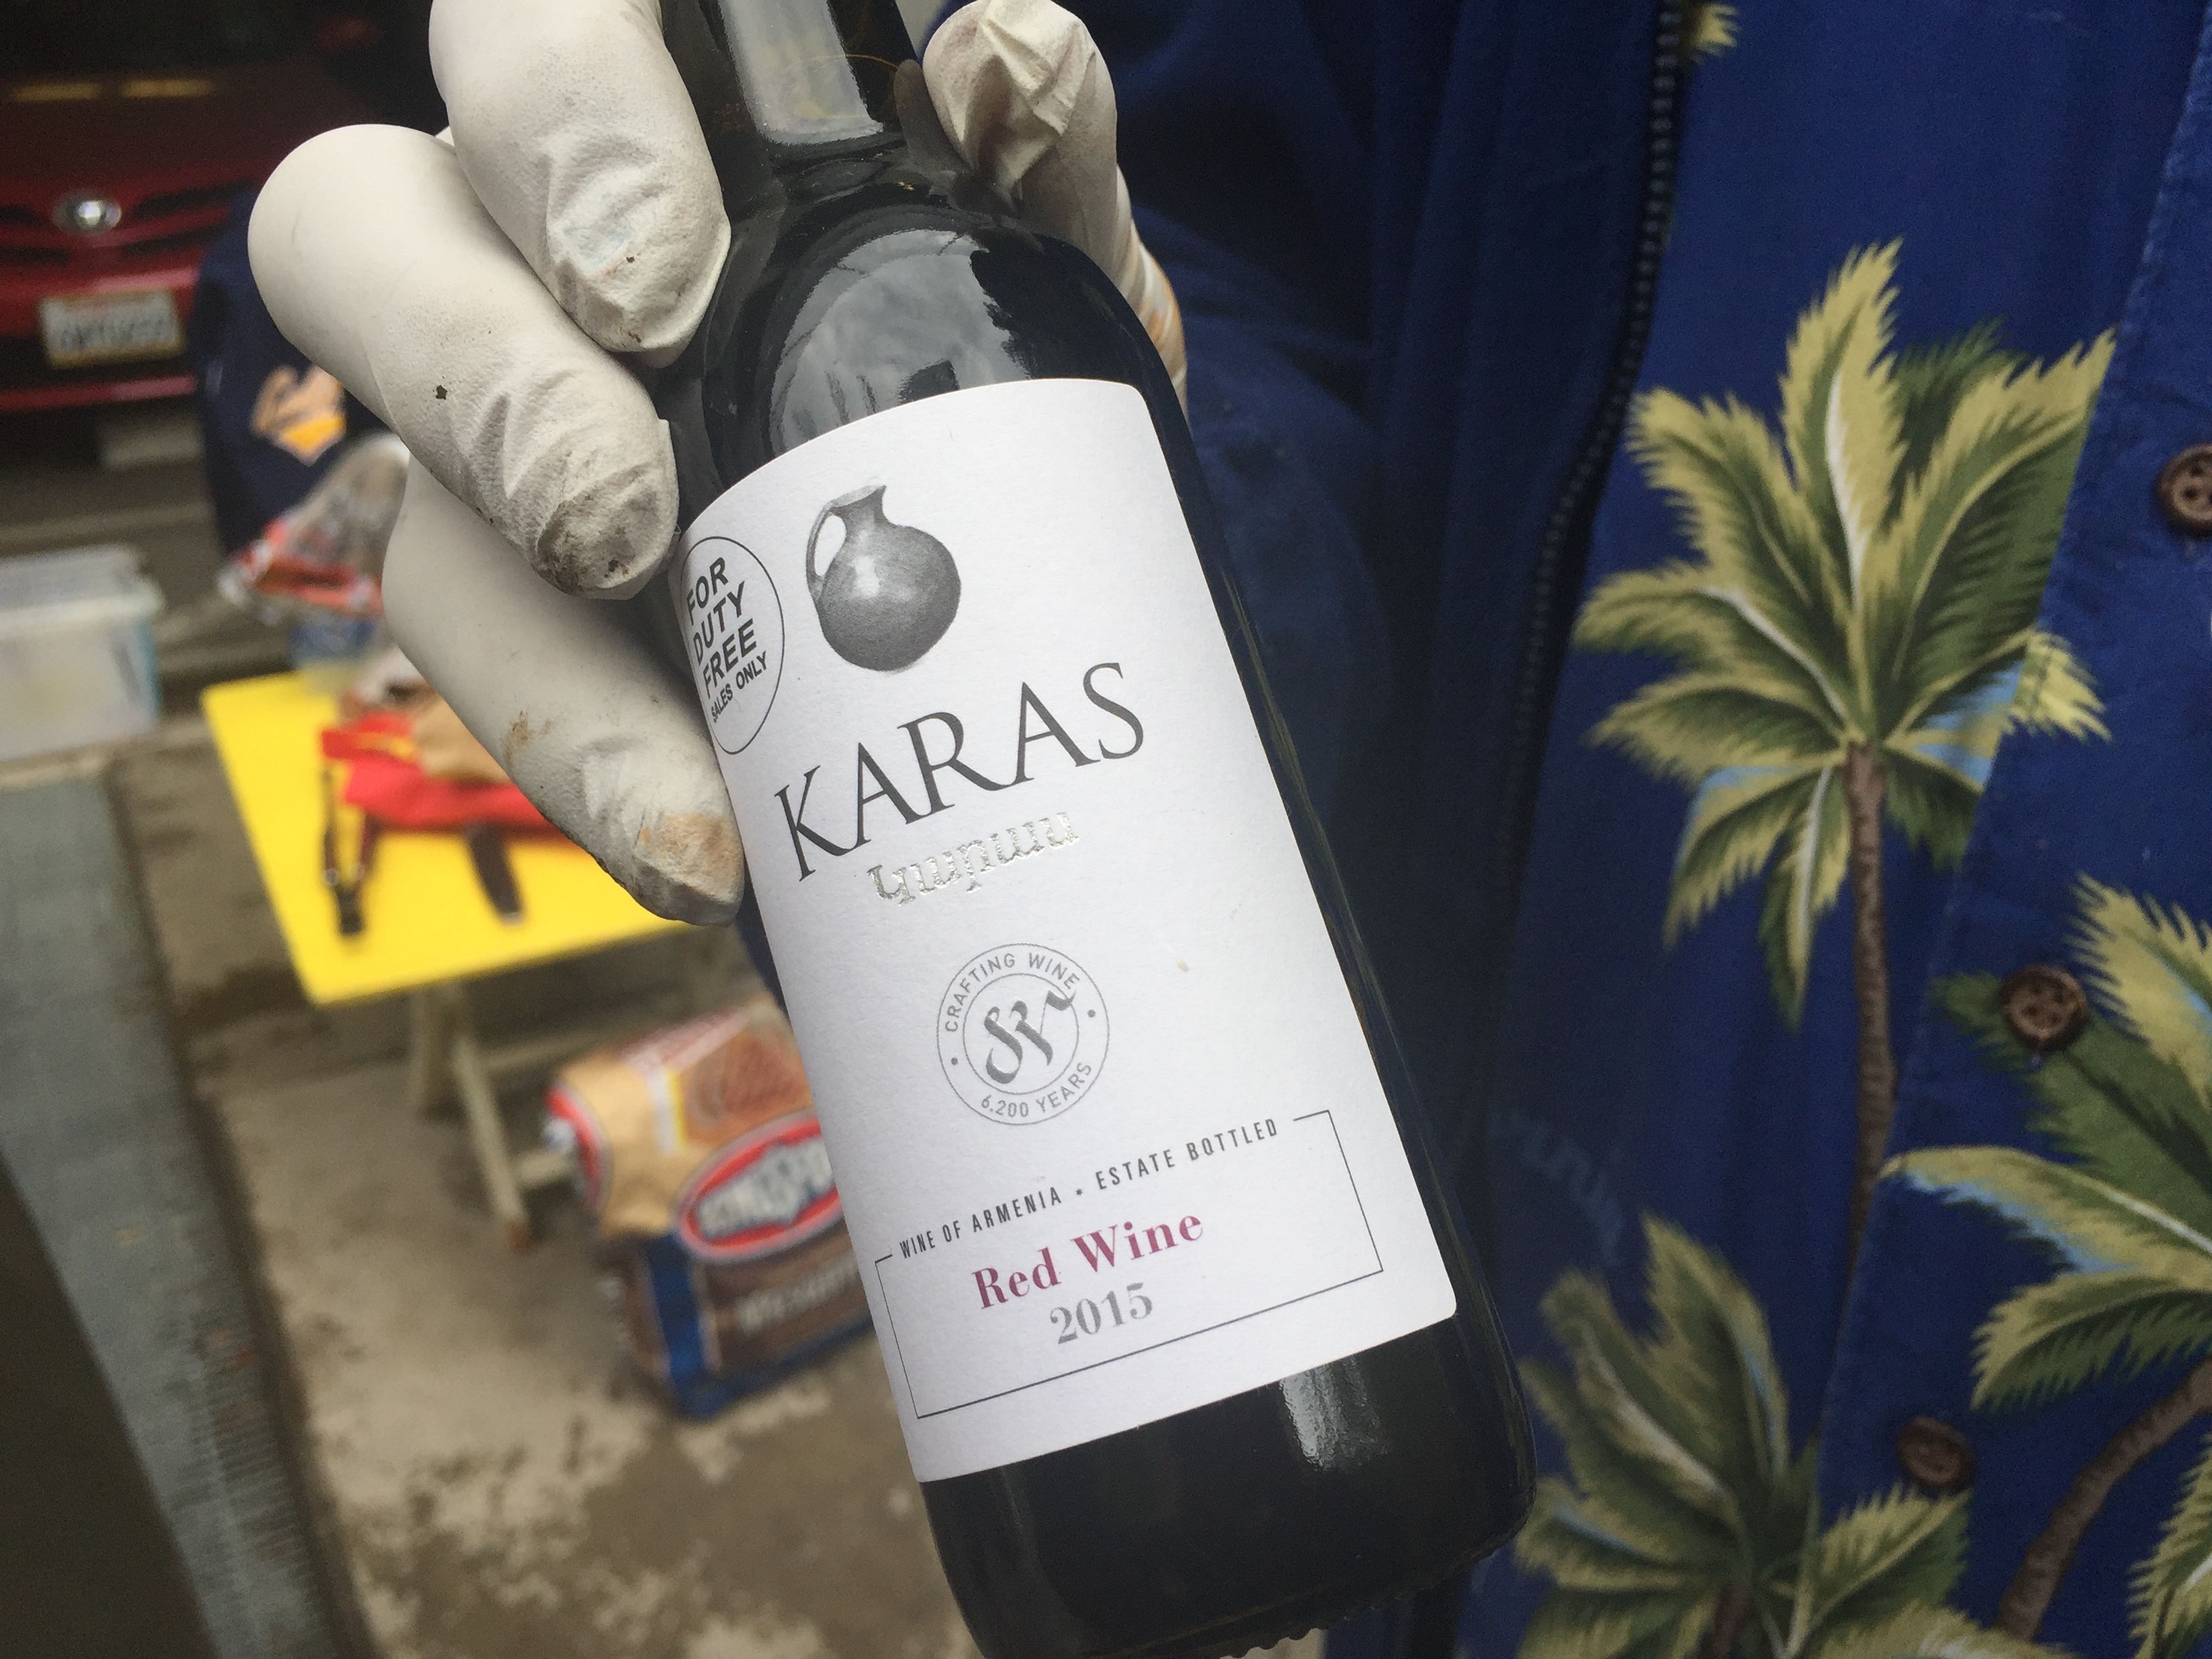 Karas Wines’ Red Wine